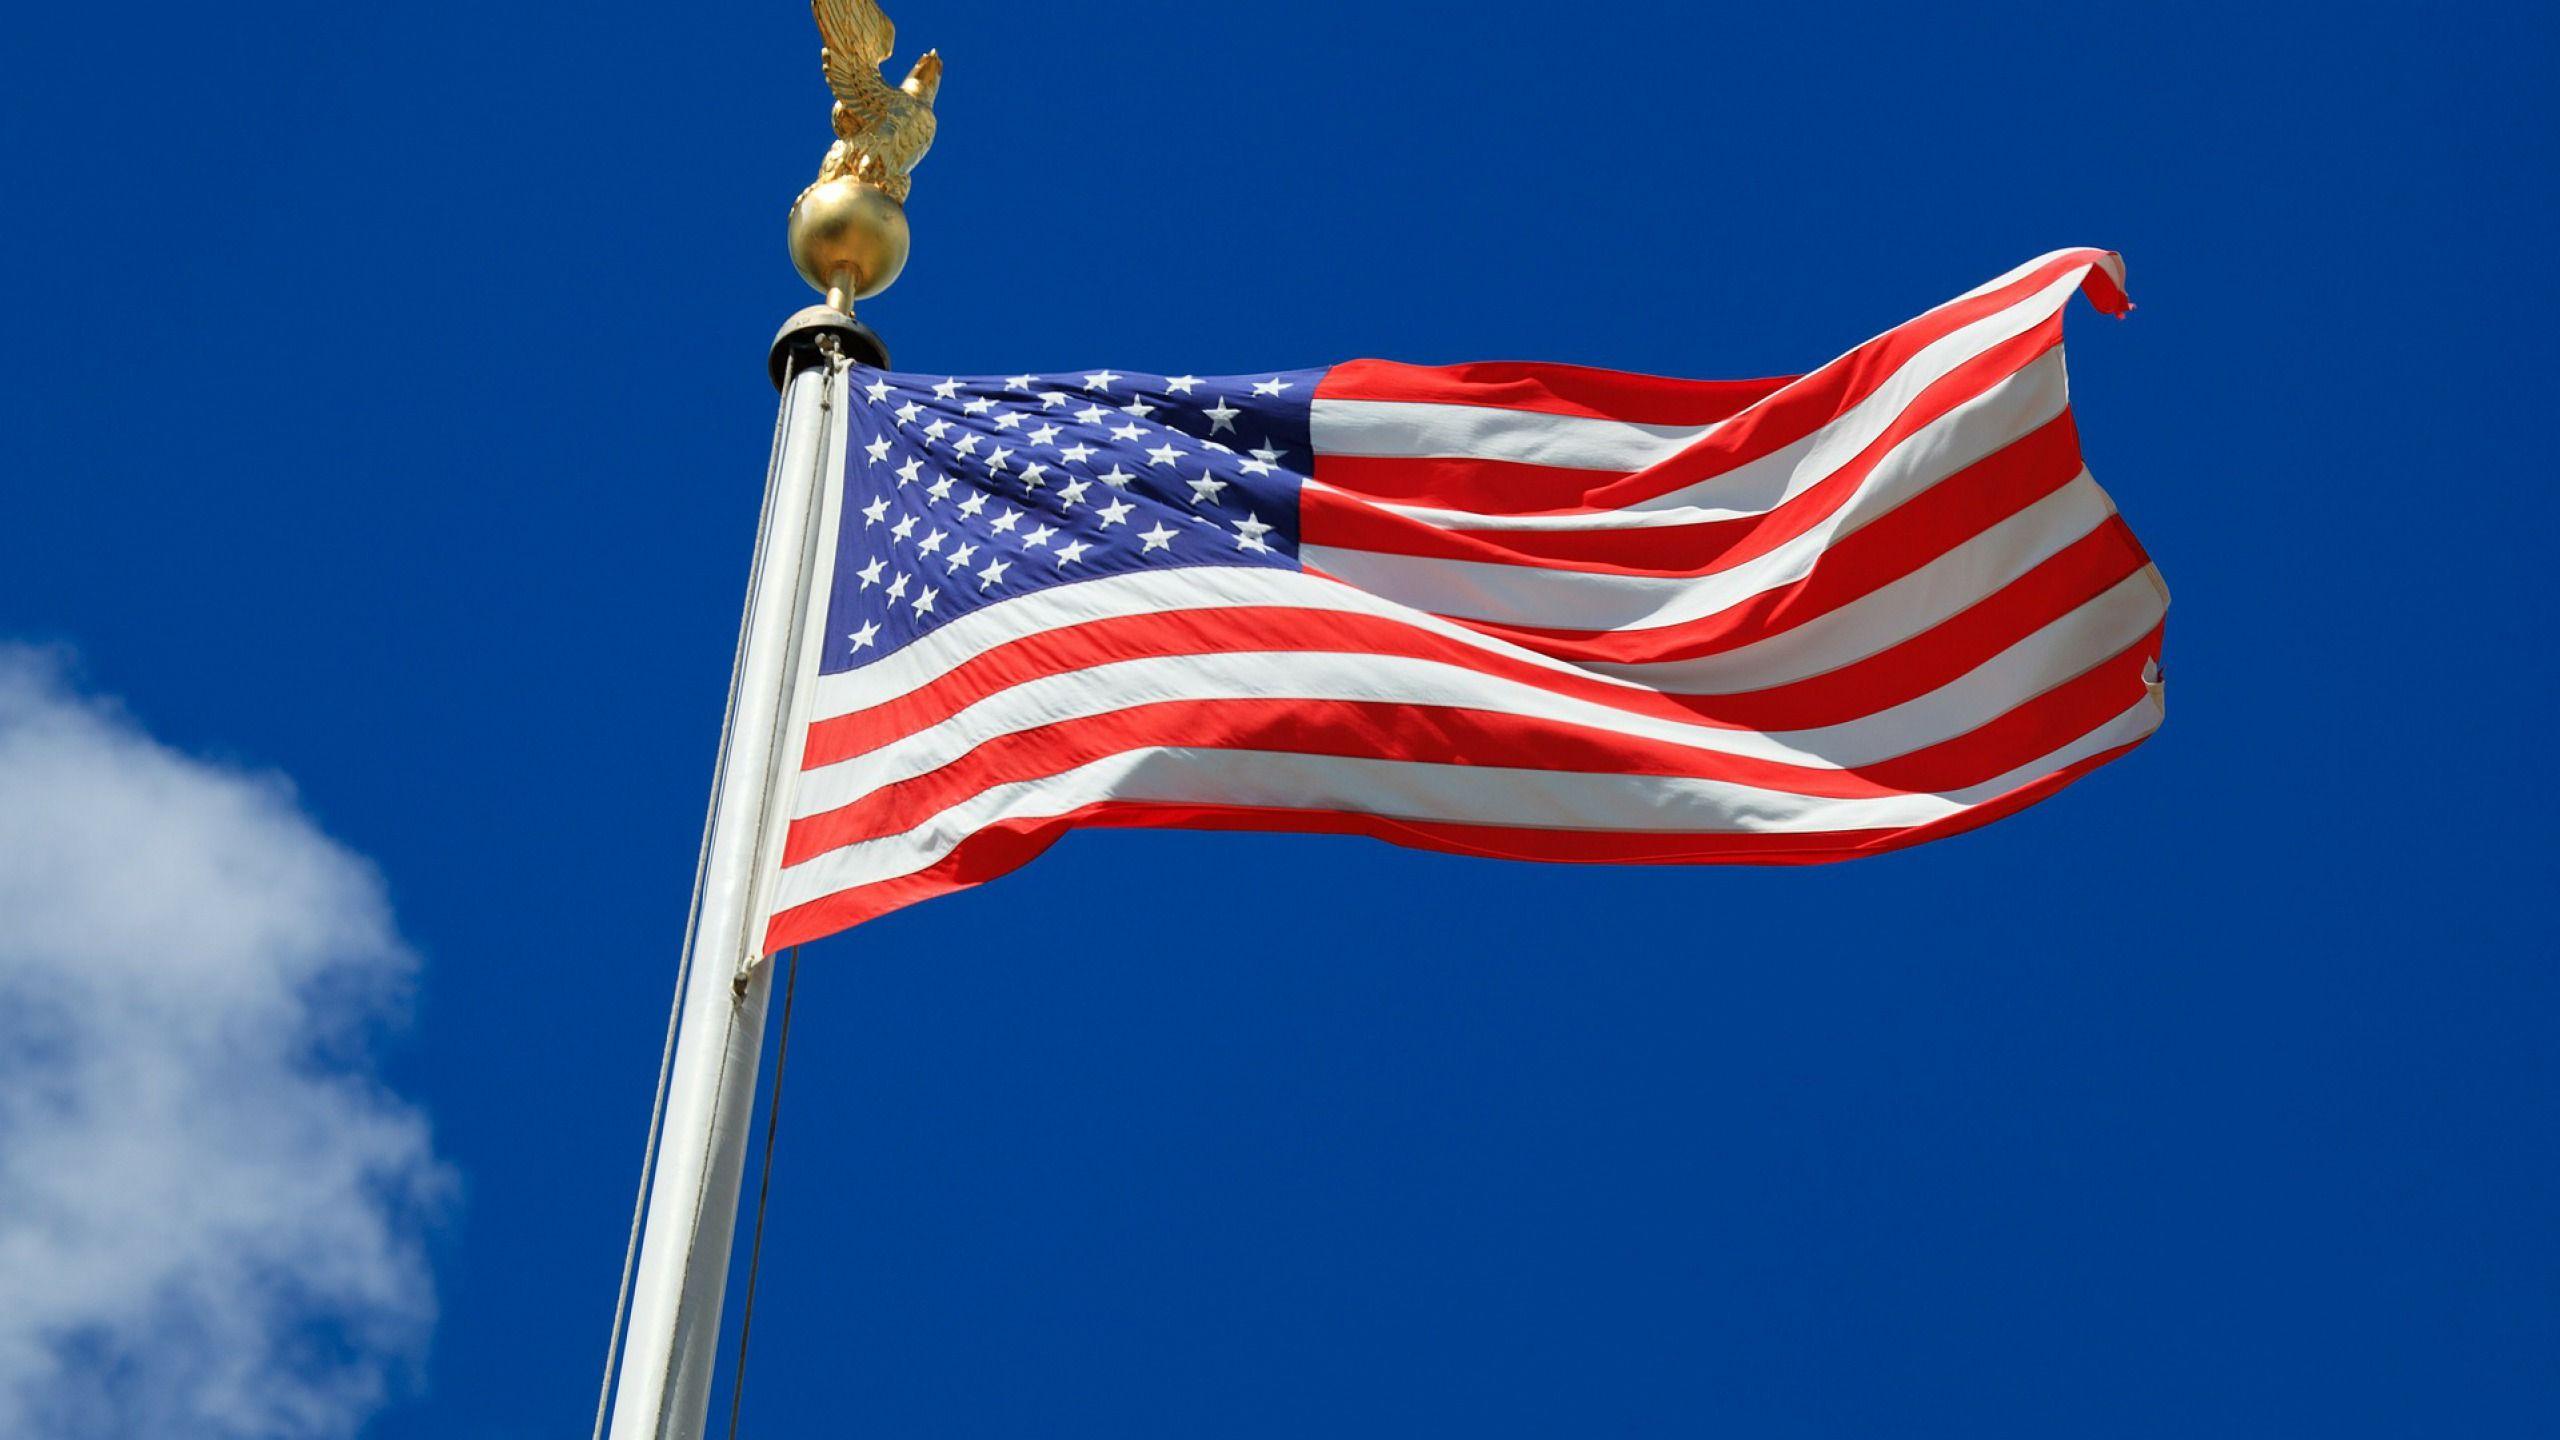 Widescreen American Flag Image 01. hdwallpaper